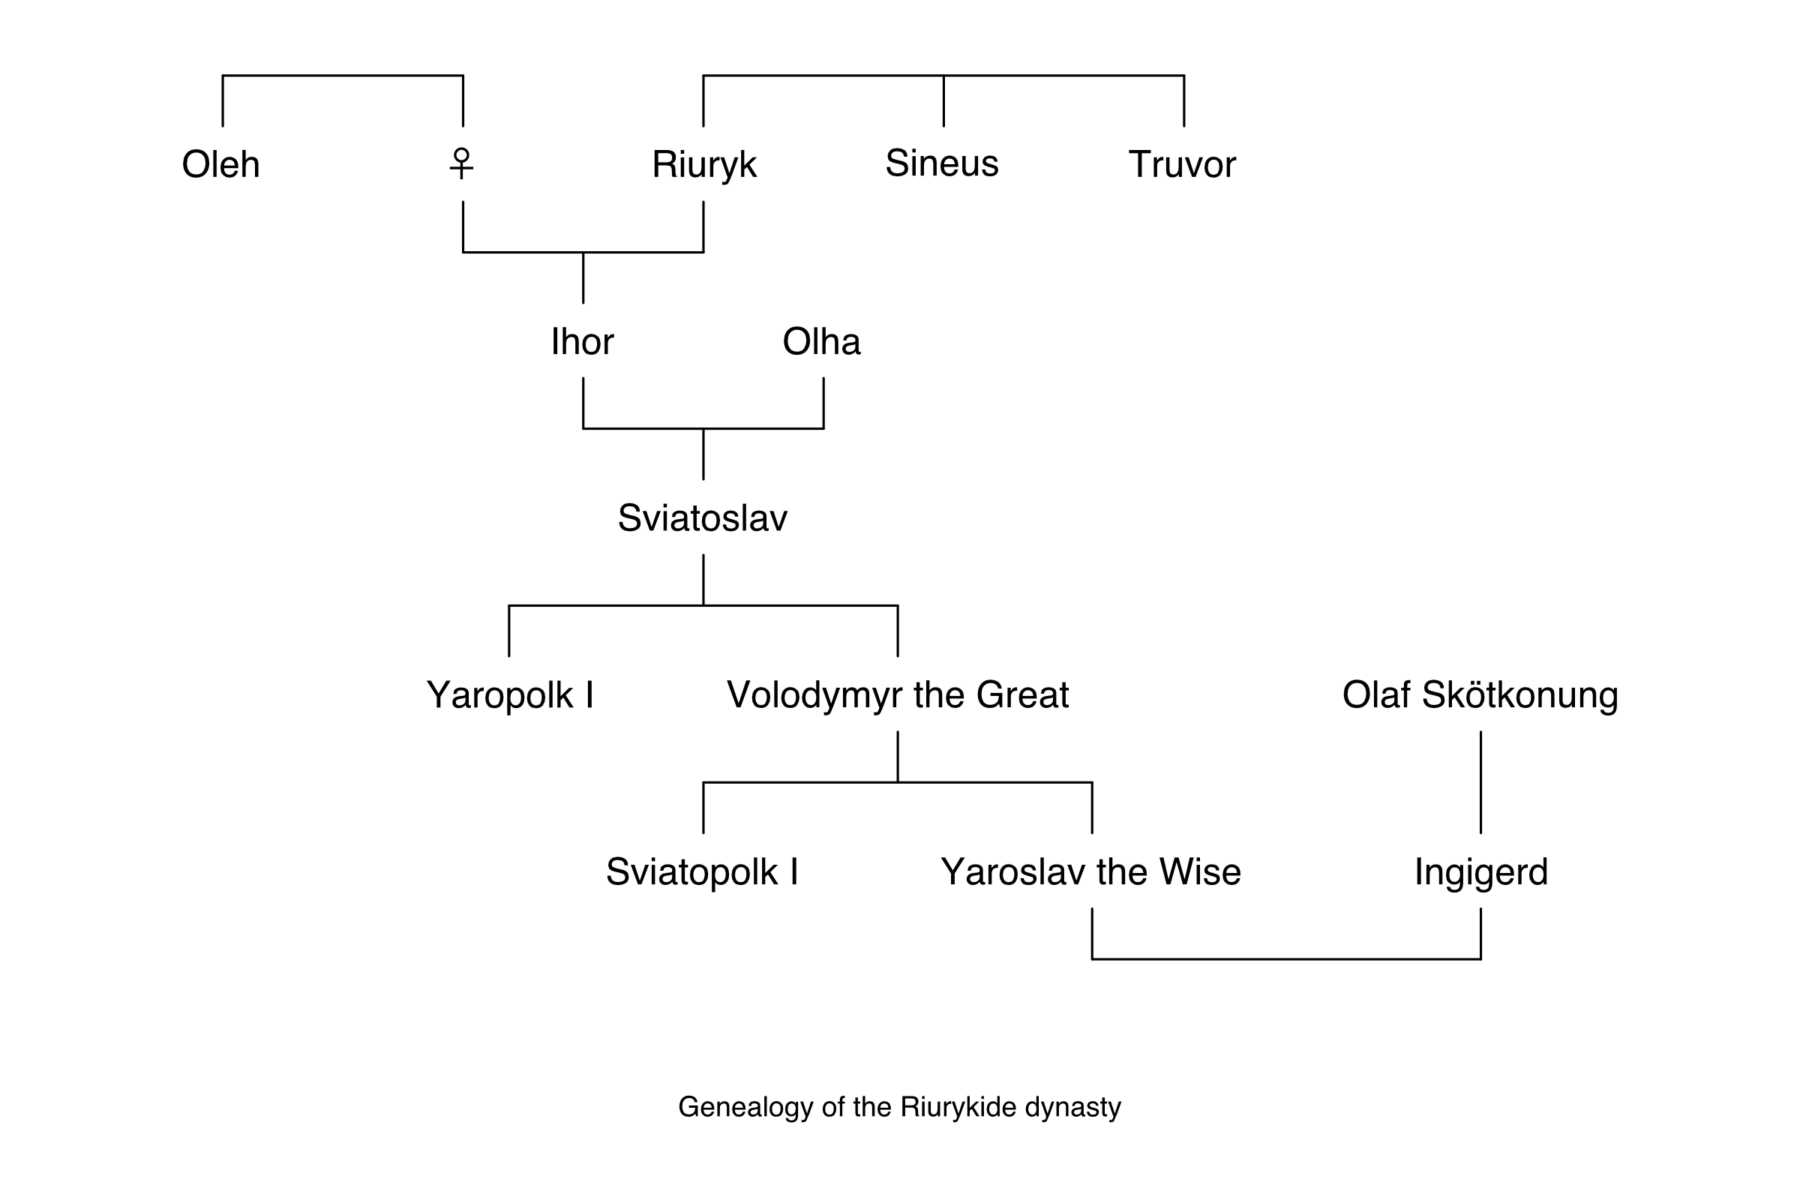 Genealogy of the Riurykide dynasty.